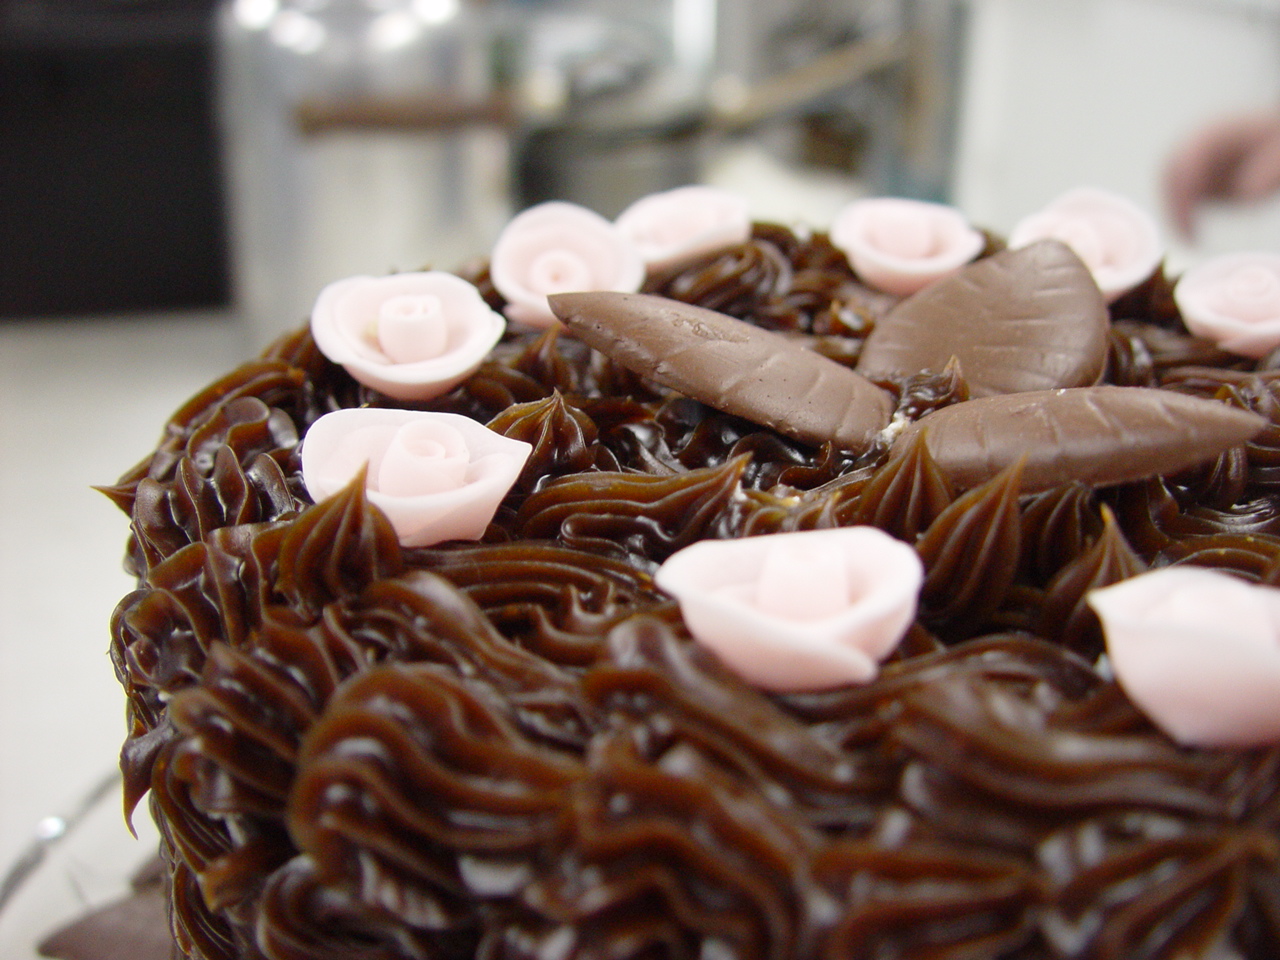 chocolate-cake-2